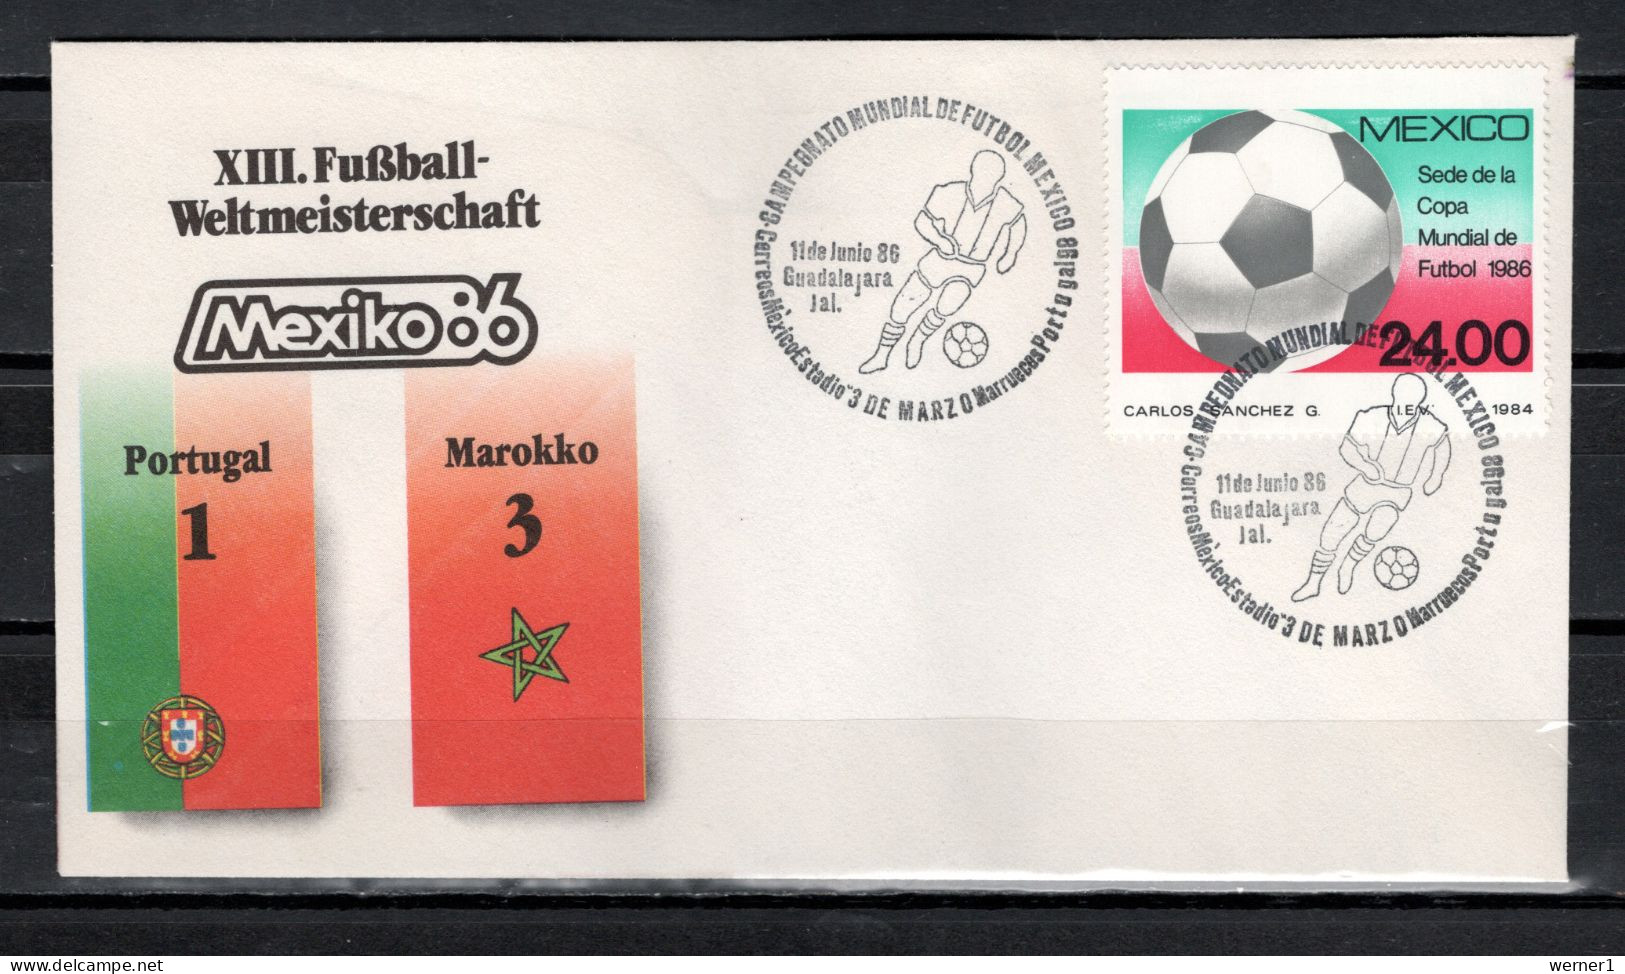 Mexico 1986 Football Soccer World Cup Commemorative Cover Match Portugal - Morocco 1 : 3 - 1986 – Mexico